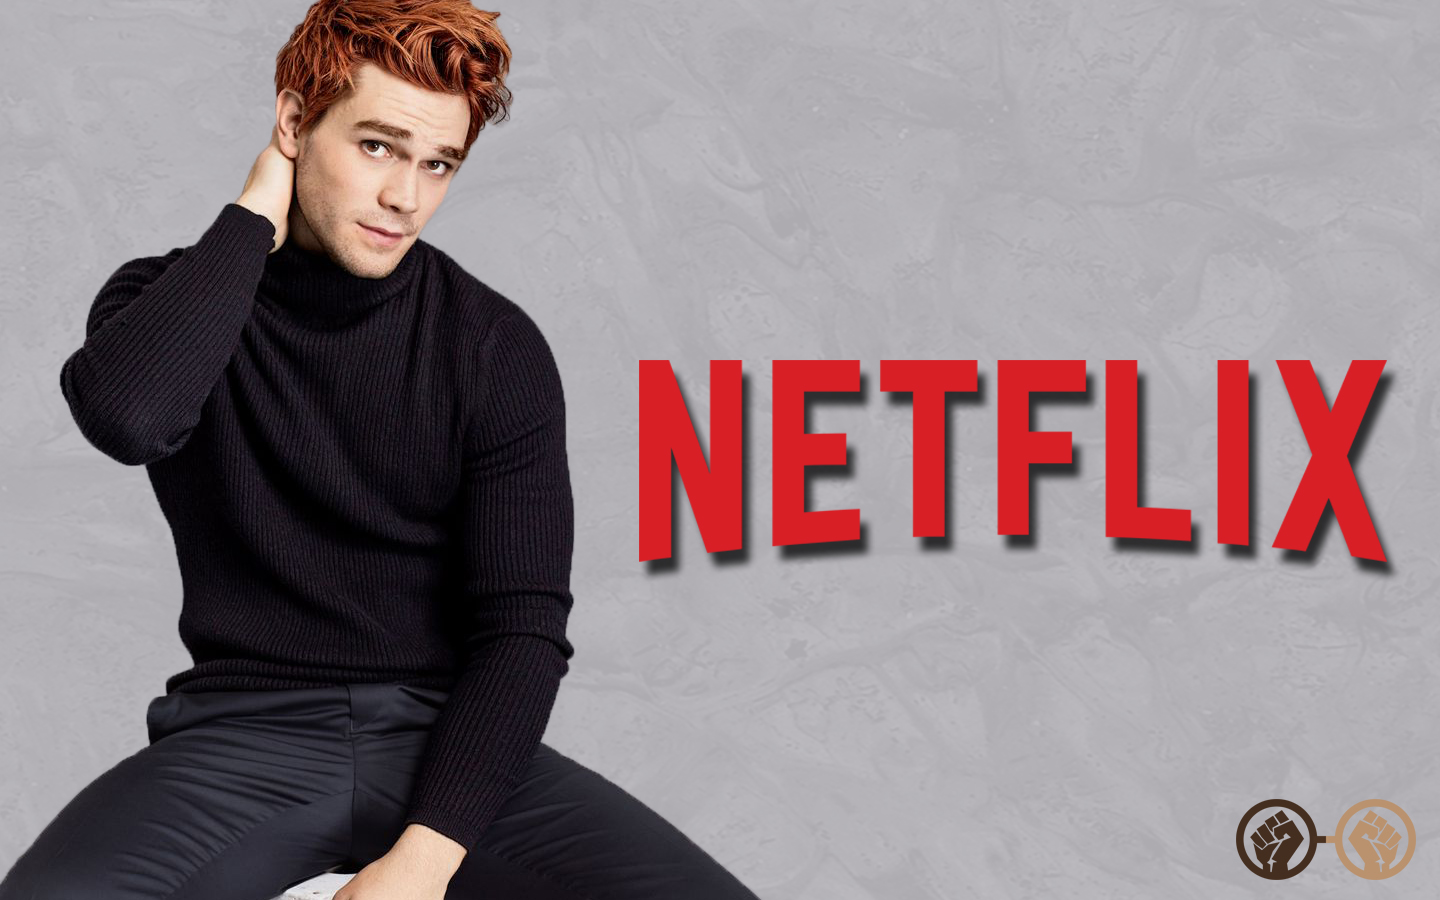 ‘Riverdale’ Star K.J. Apa Cast in Netflix’s Romantic Comedy ‘Last Summer’